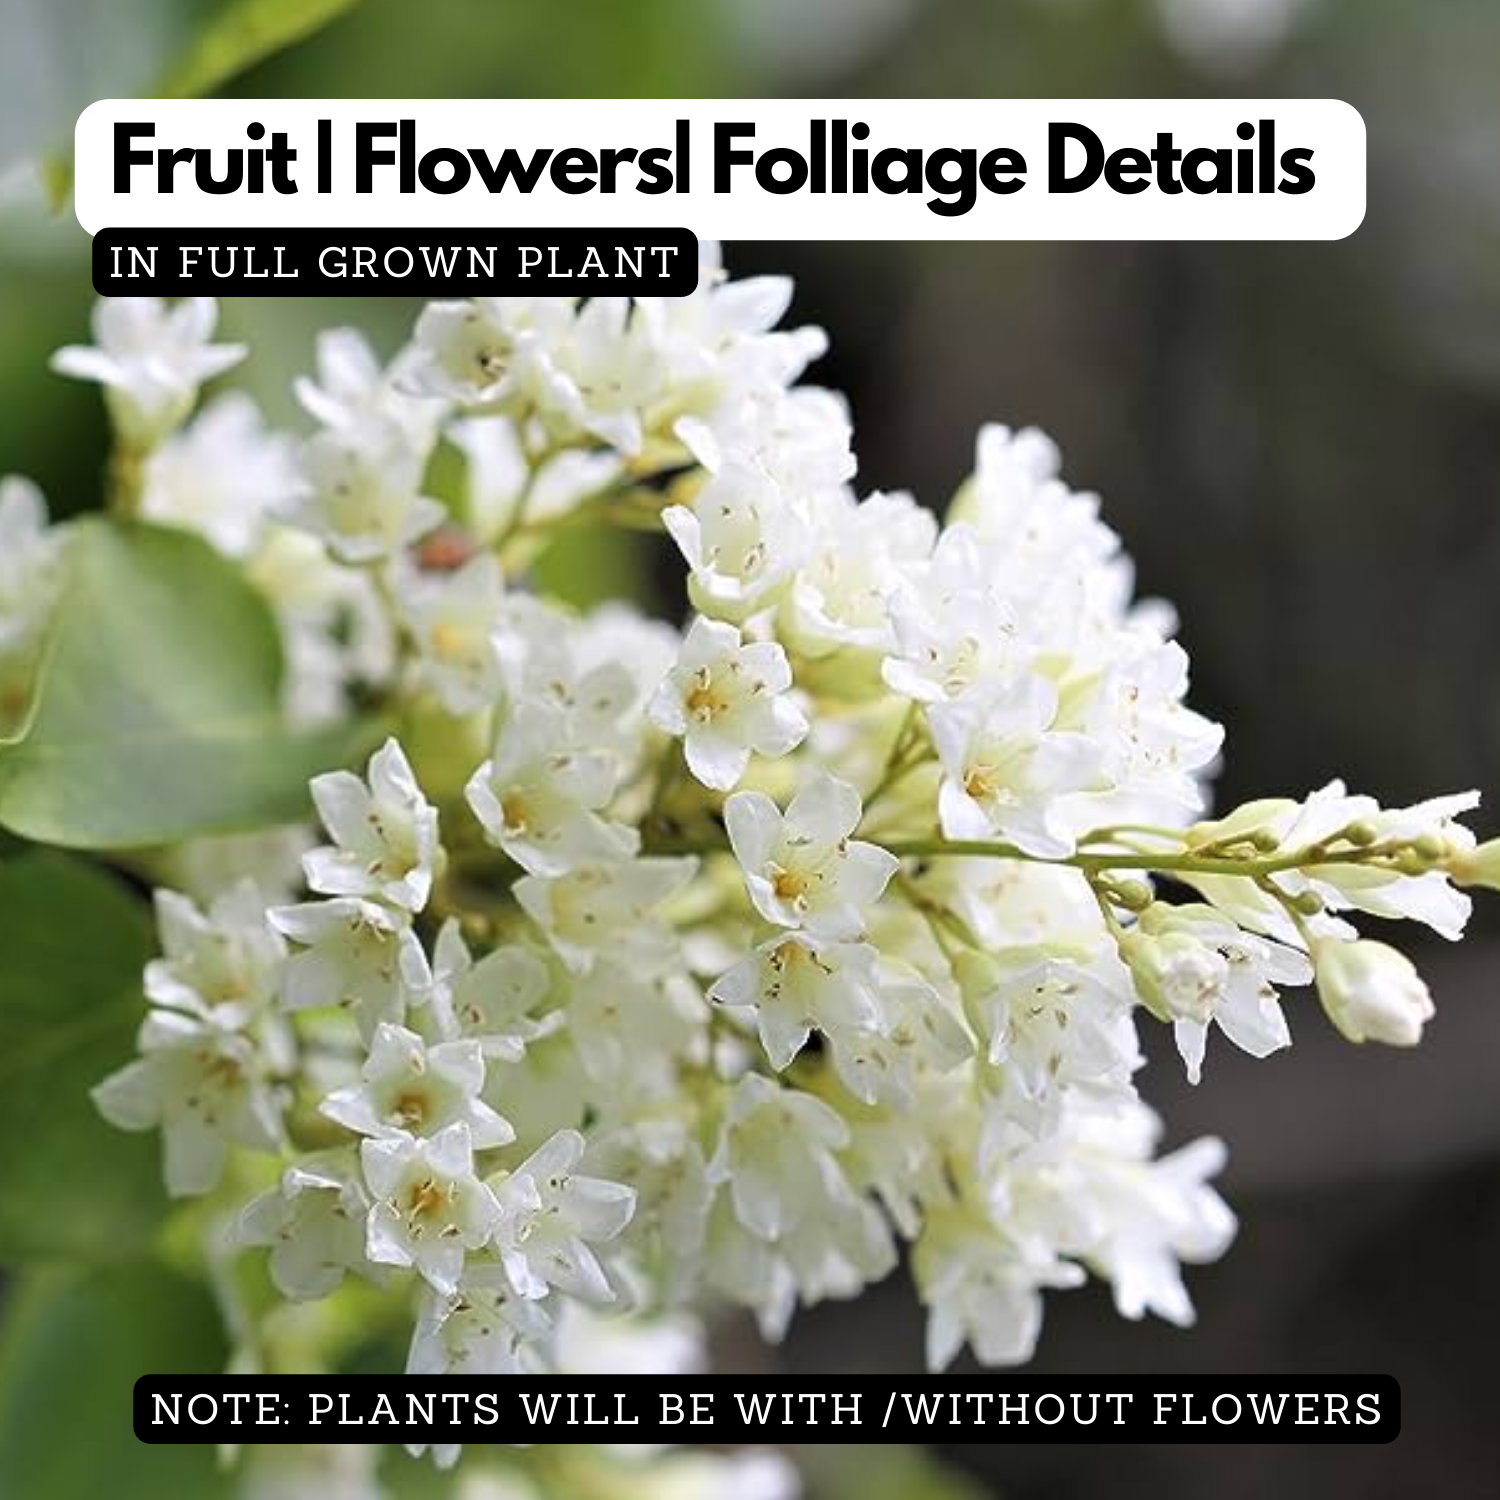 Manimulla (Porana Paniculata) Flowering/Ornamental Live Plant (Home & Garden)